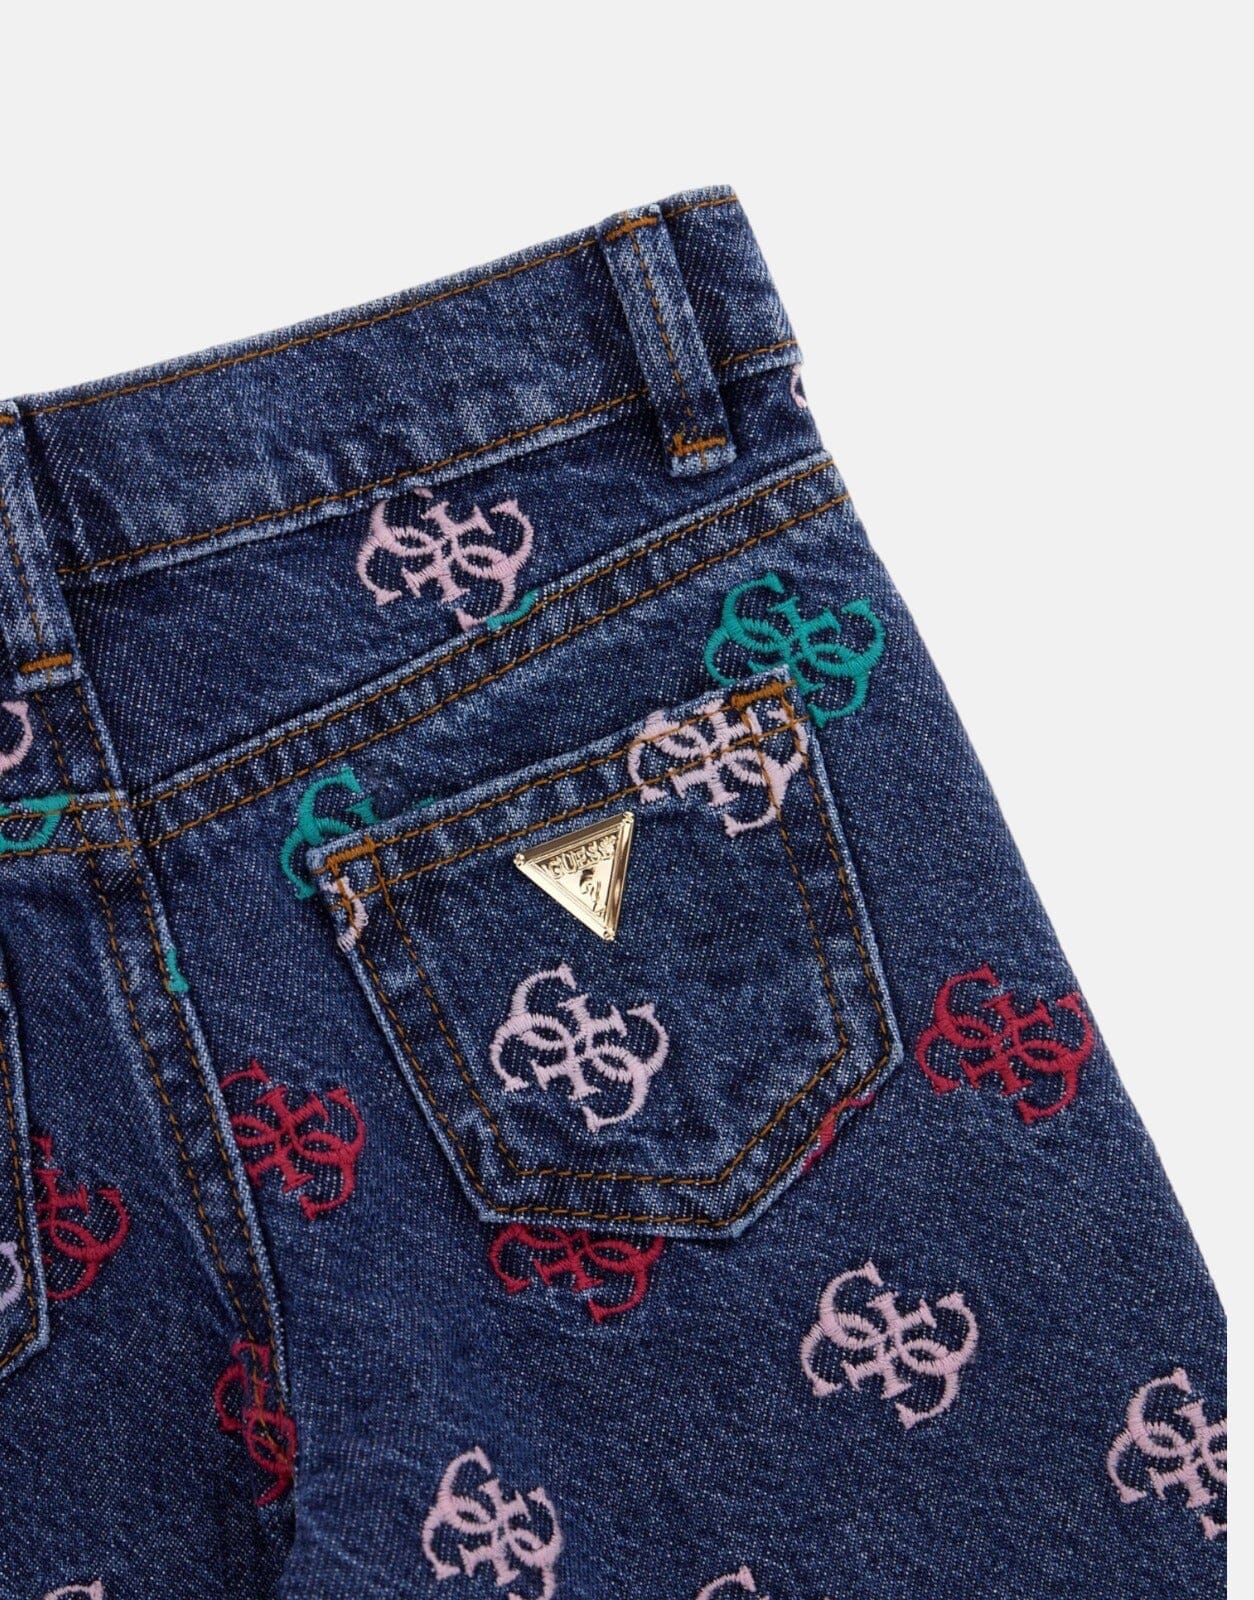 Guess Kids 90s Fit Coulotte Denim Jeans - Subwear